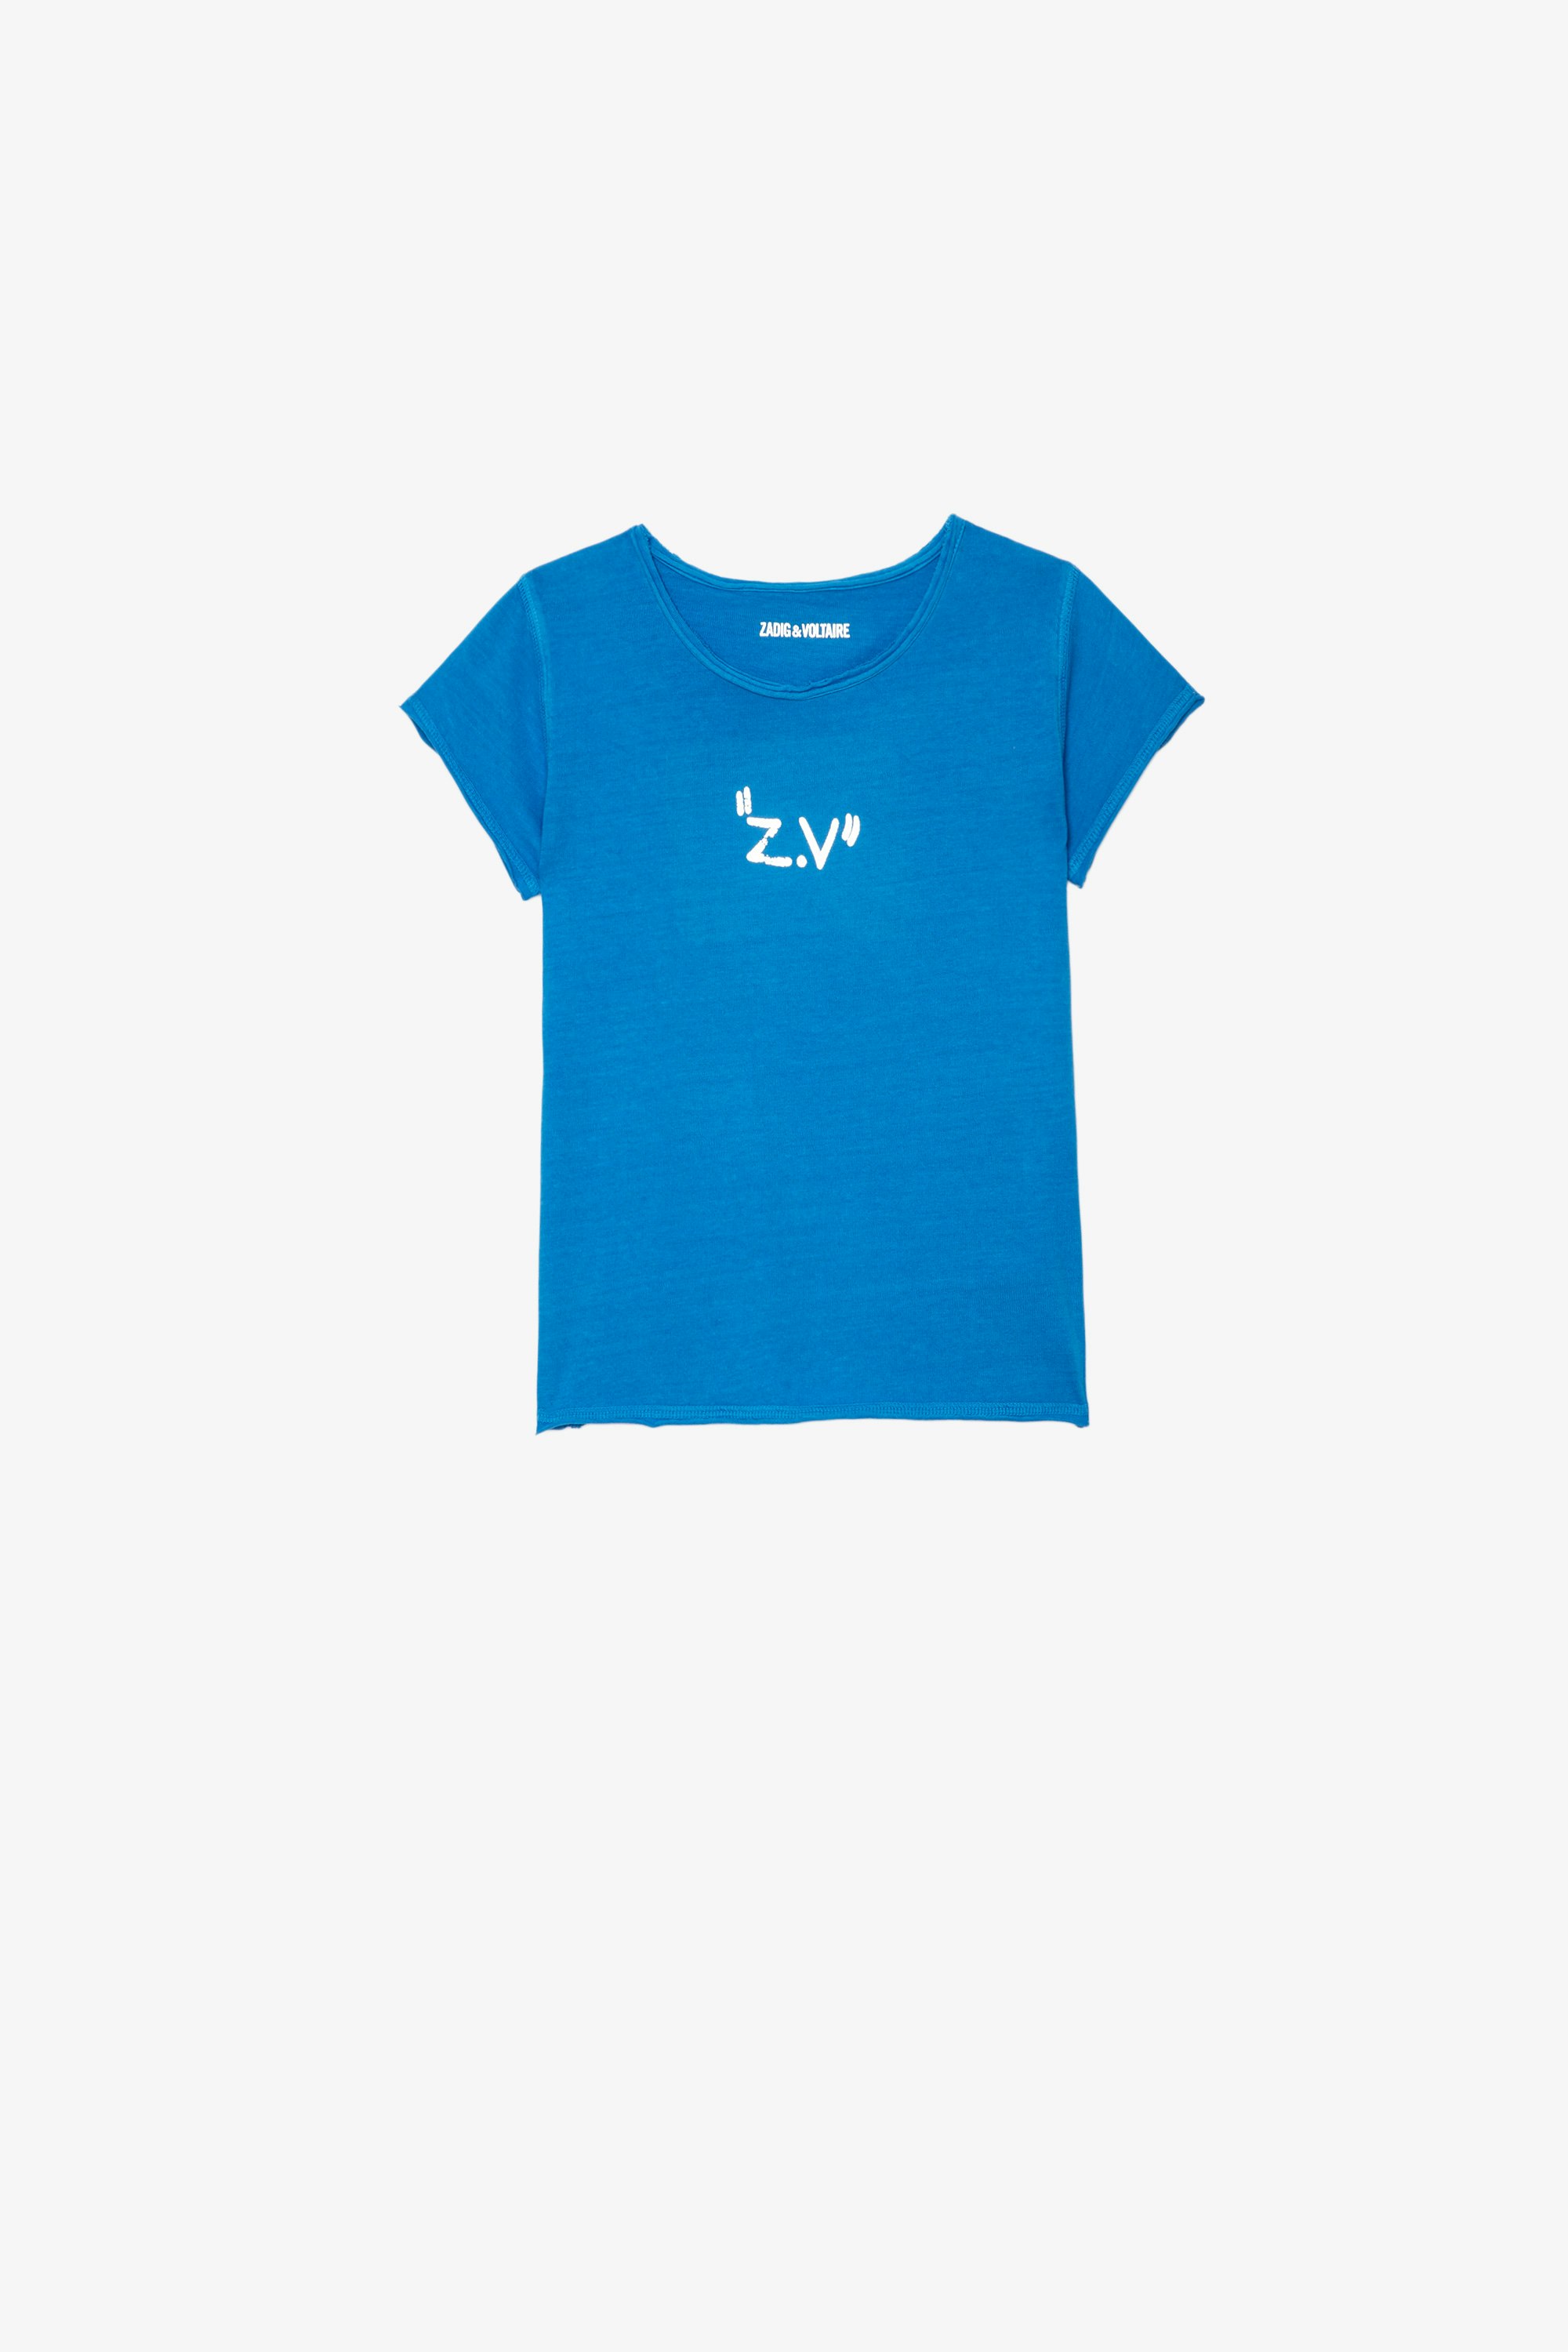 Amber Kids' T-Shirt Kids’ T-shirt in blue cotton jersey with metallic-effect prints